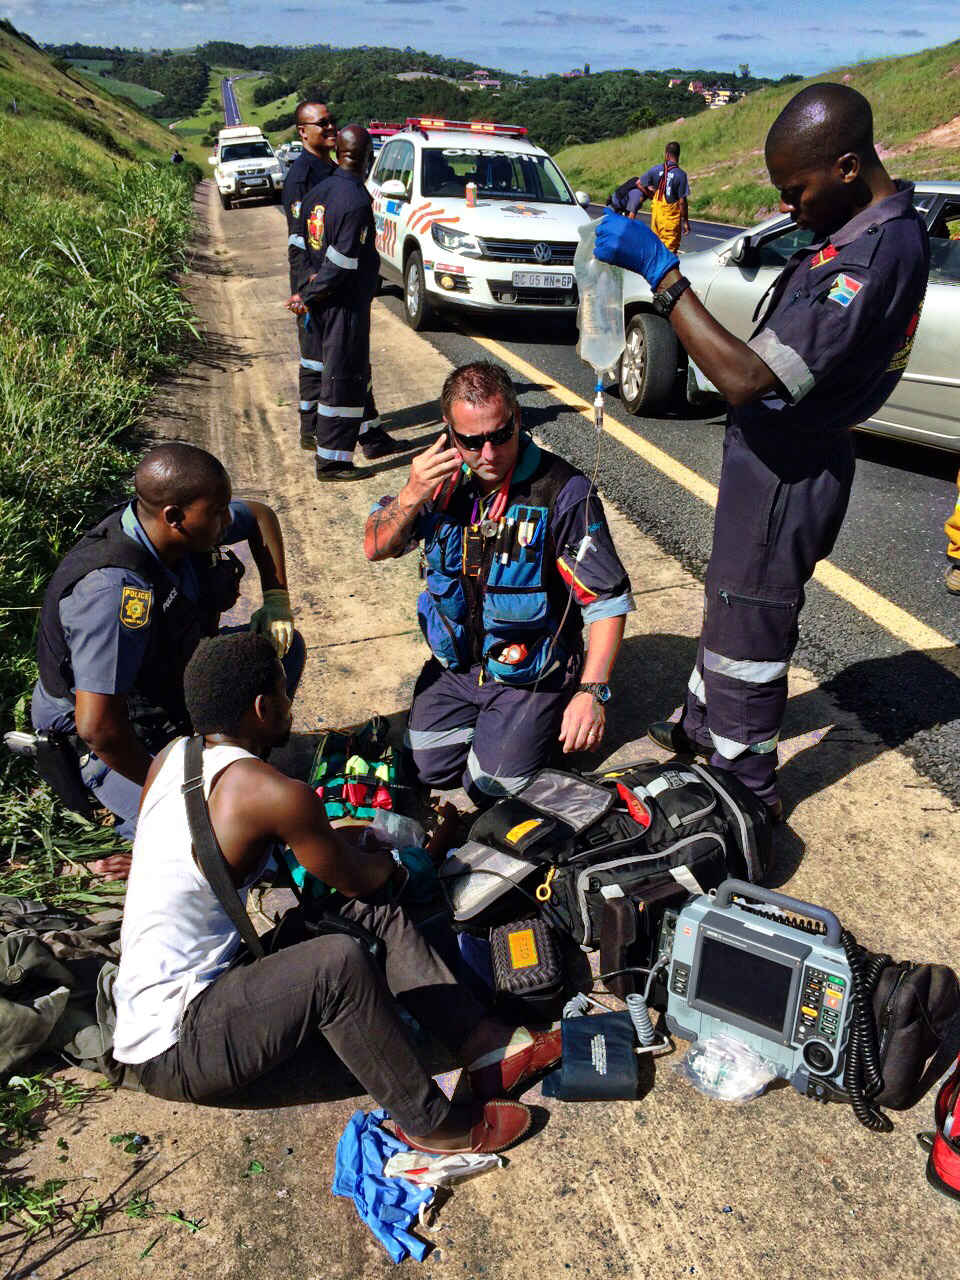 South coast N2 road crash leaves boy critically injured